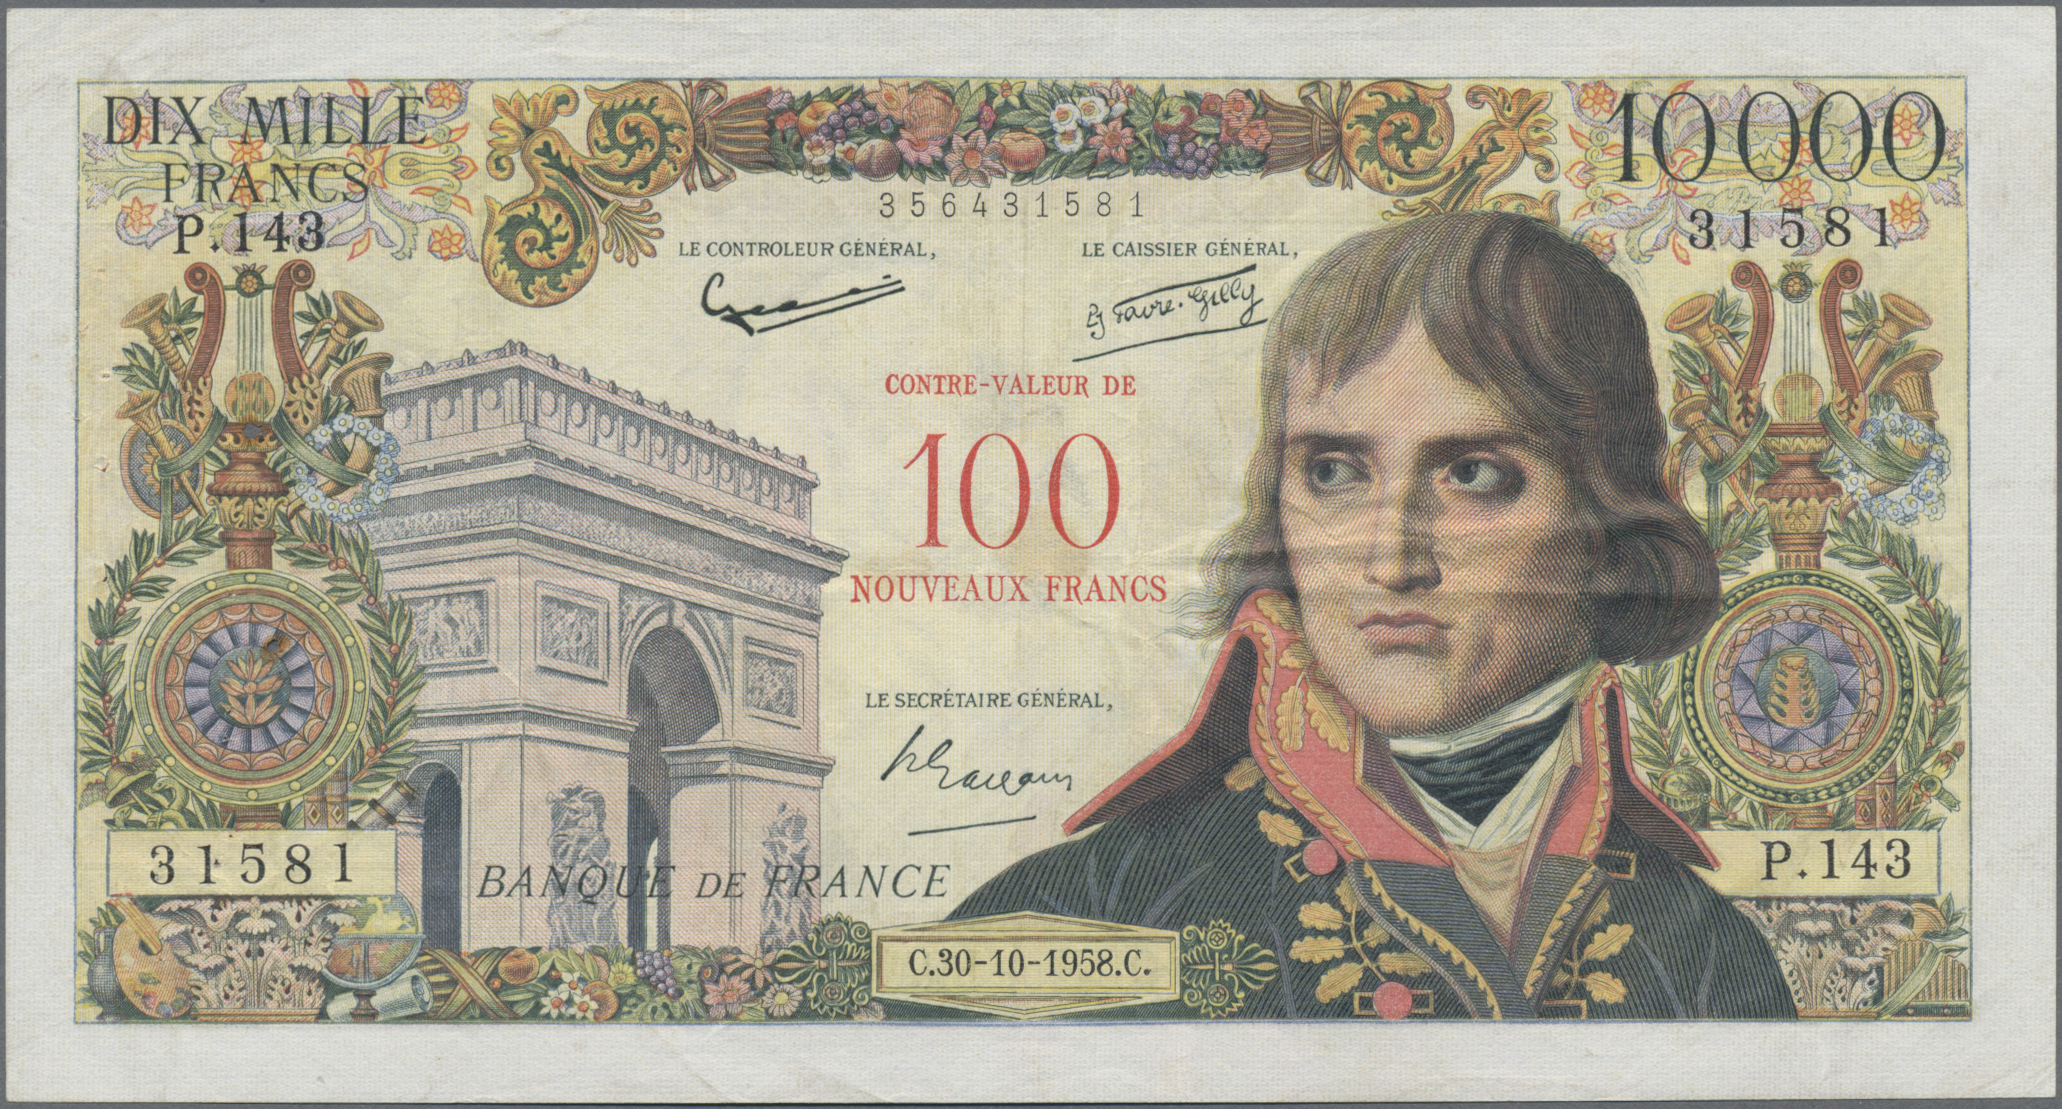 Lot 00195 - France / Frankreich | Banknoten  -  Auktionshaus Christoph Gärtner GmbH & Co. KG 55th AUCTION - Day 1